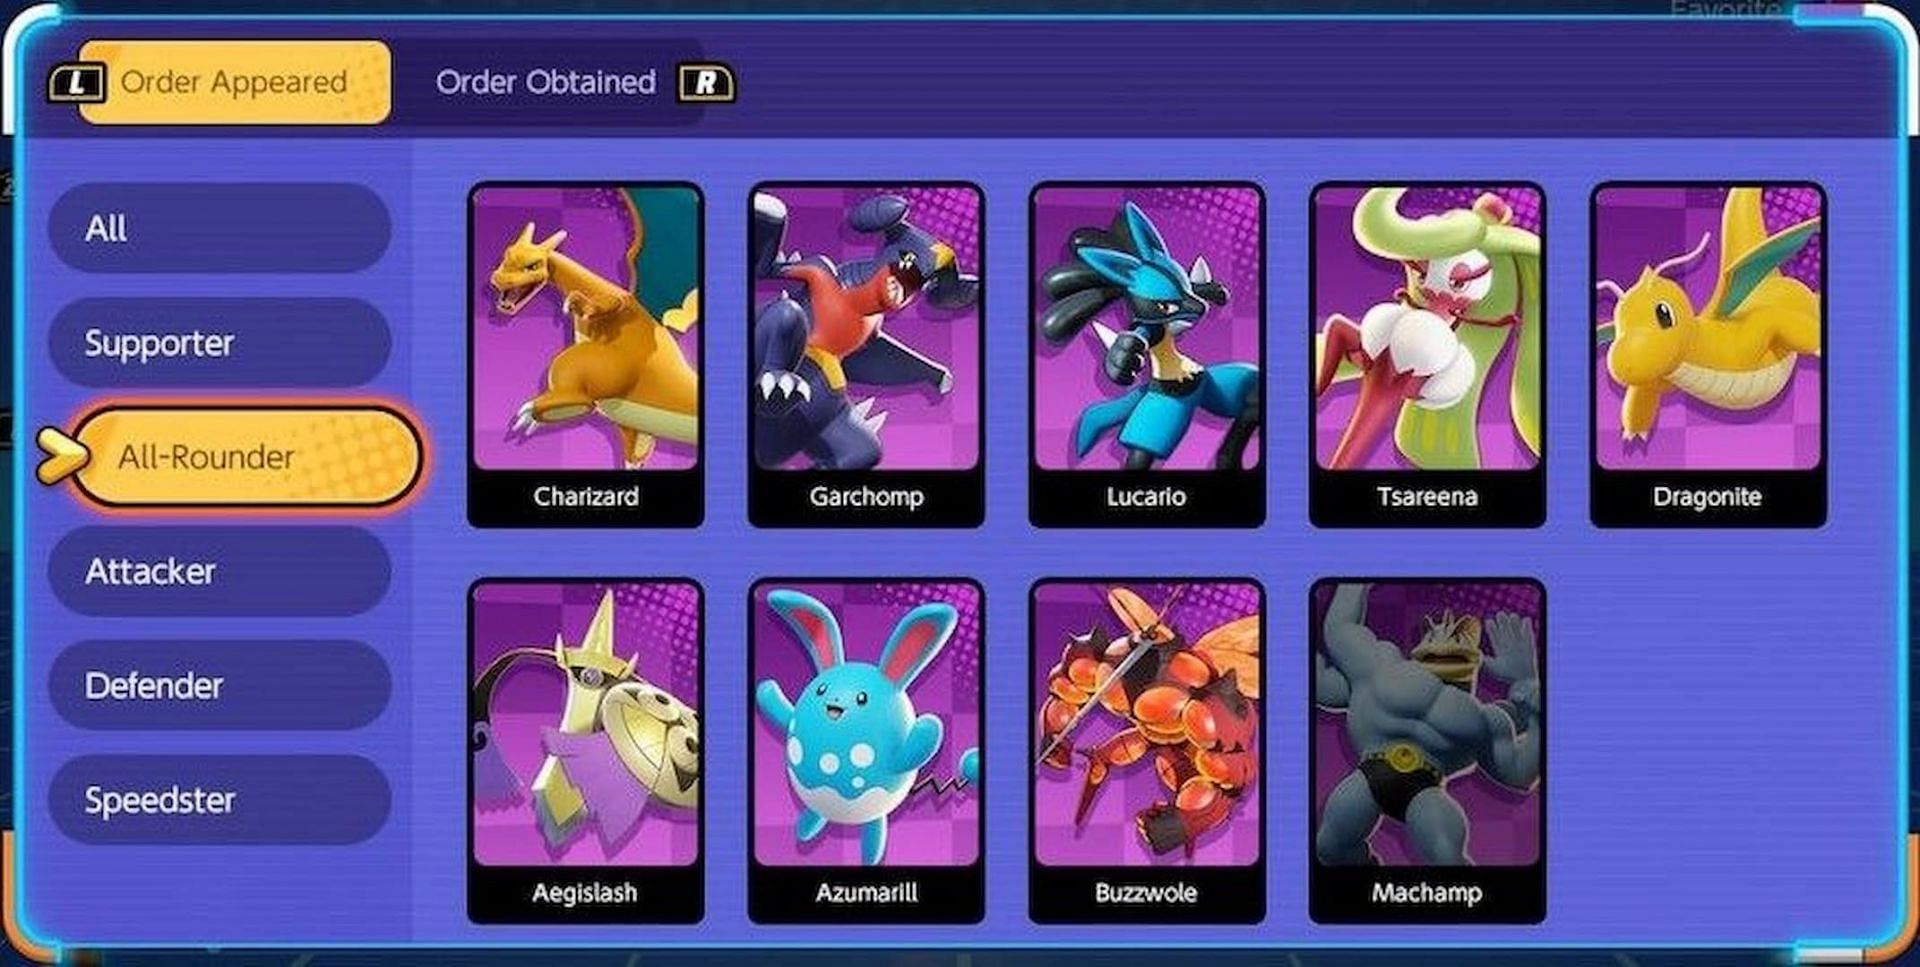 Mewtwo on X: Objective Pokémon Unite tier list based on many